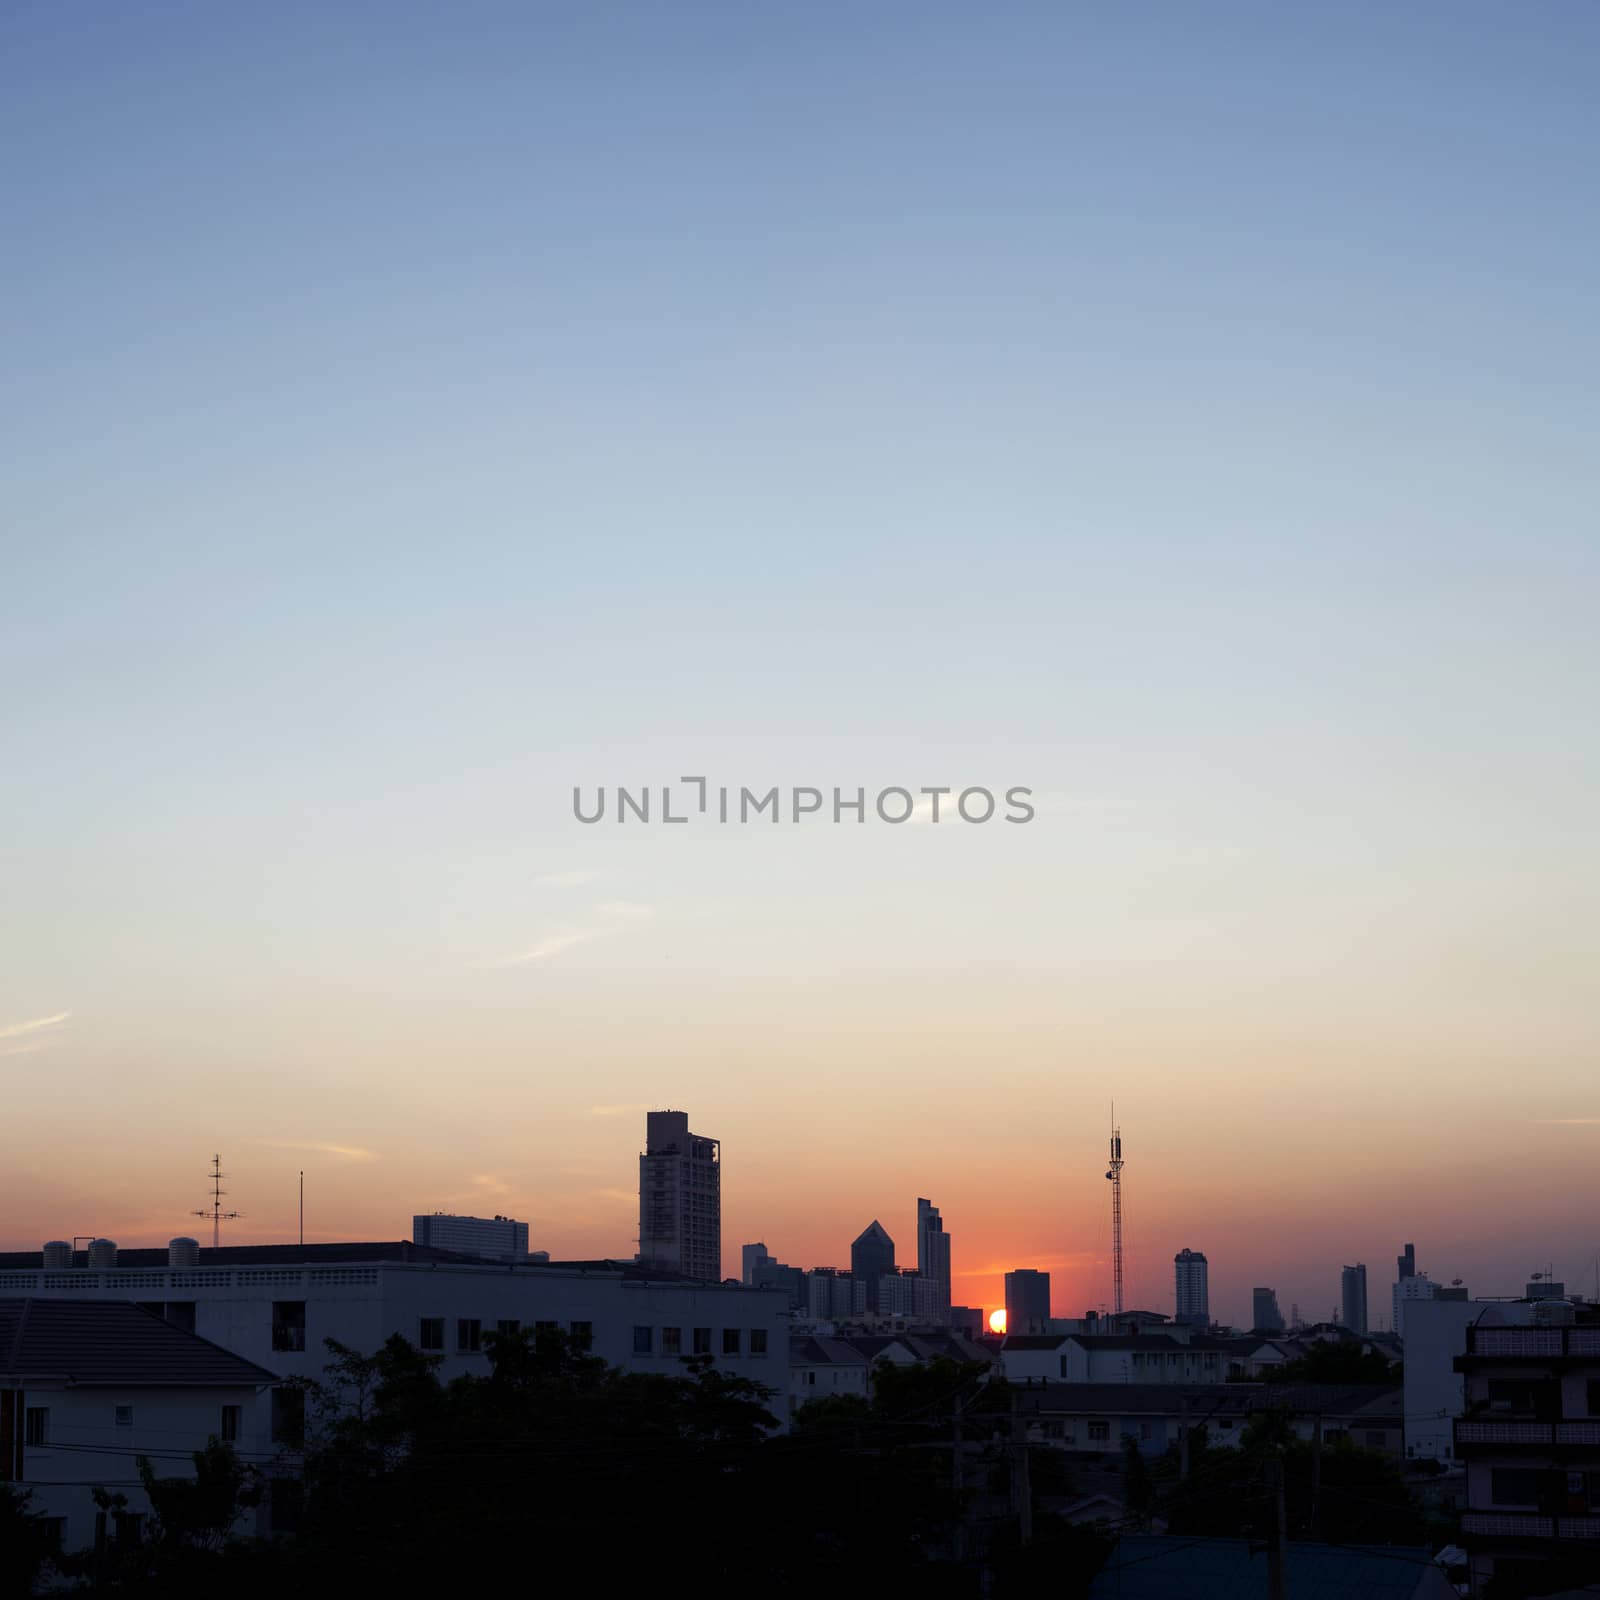 Sunrise at city of Bangkok, Thailand